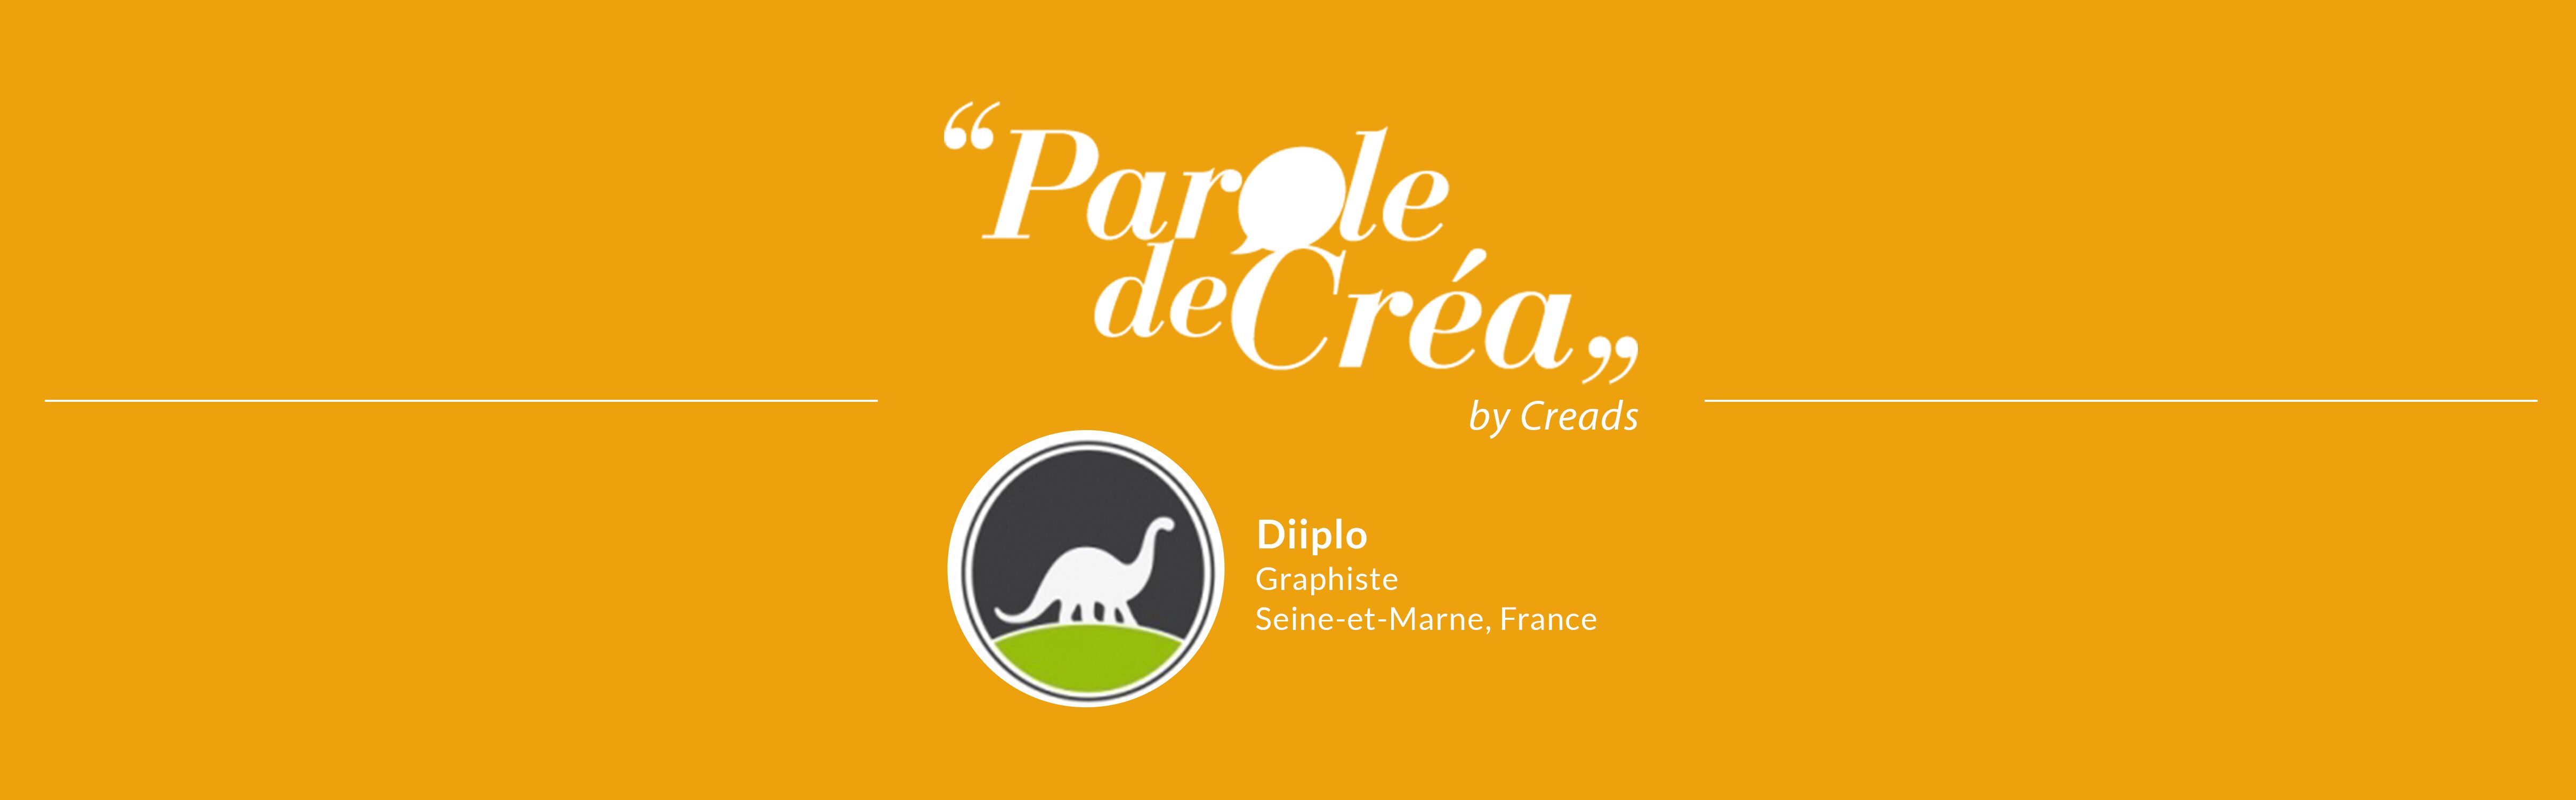 Diiplo graphiste freelance France